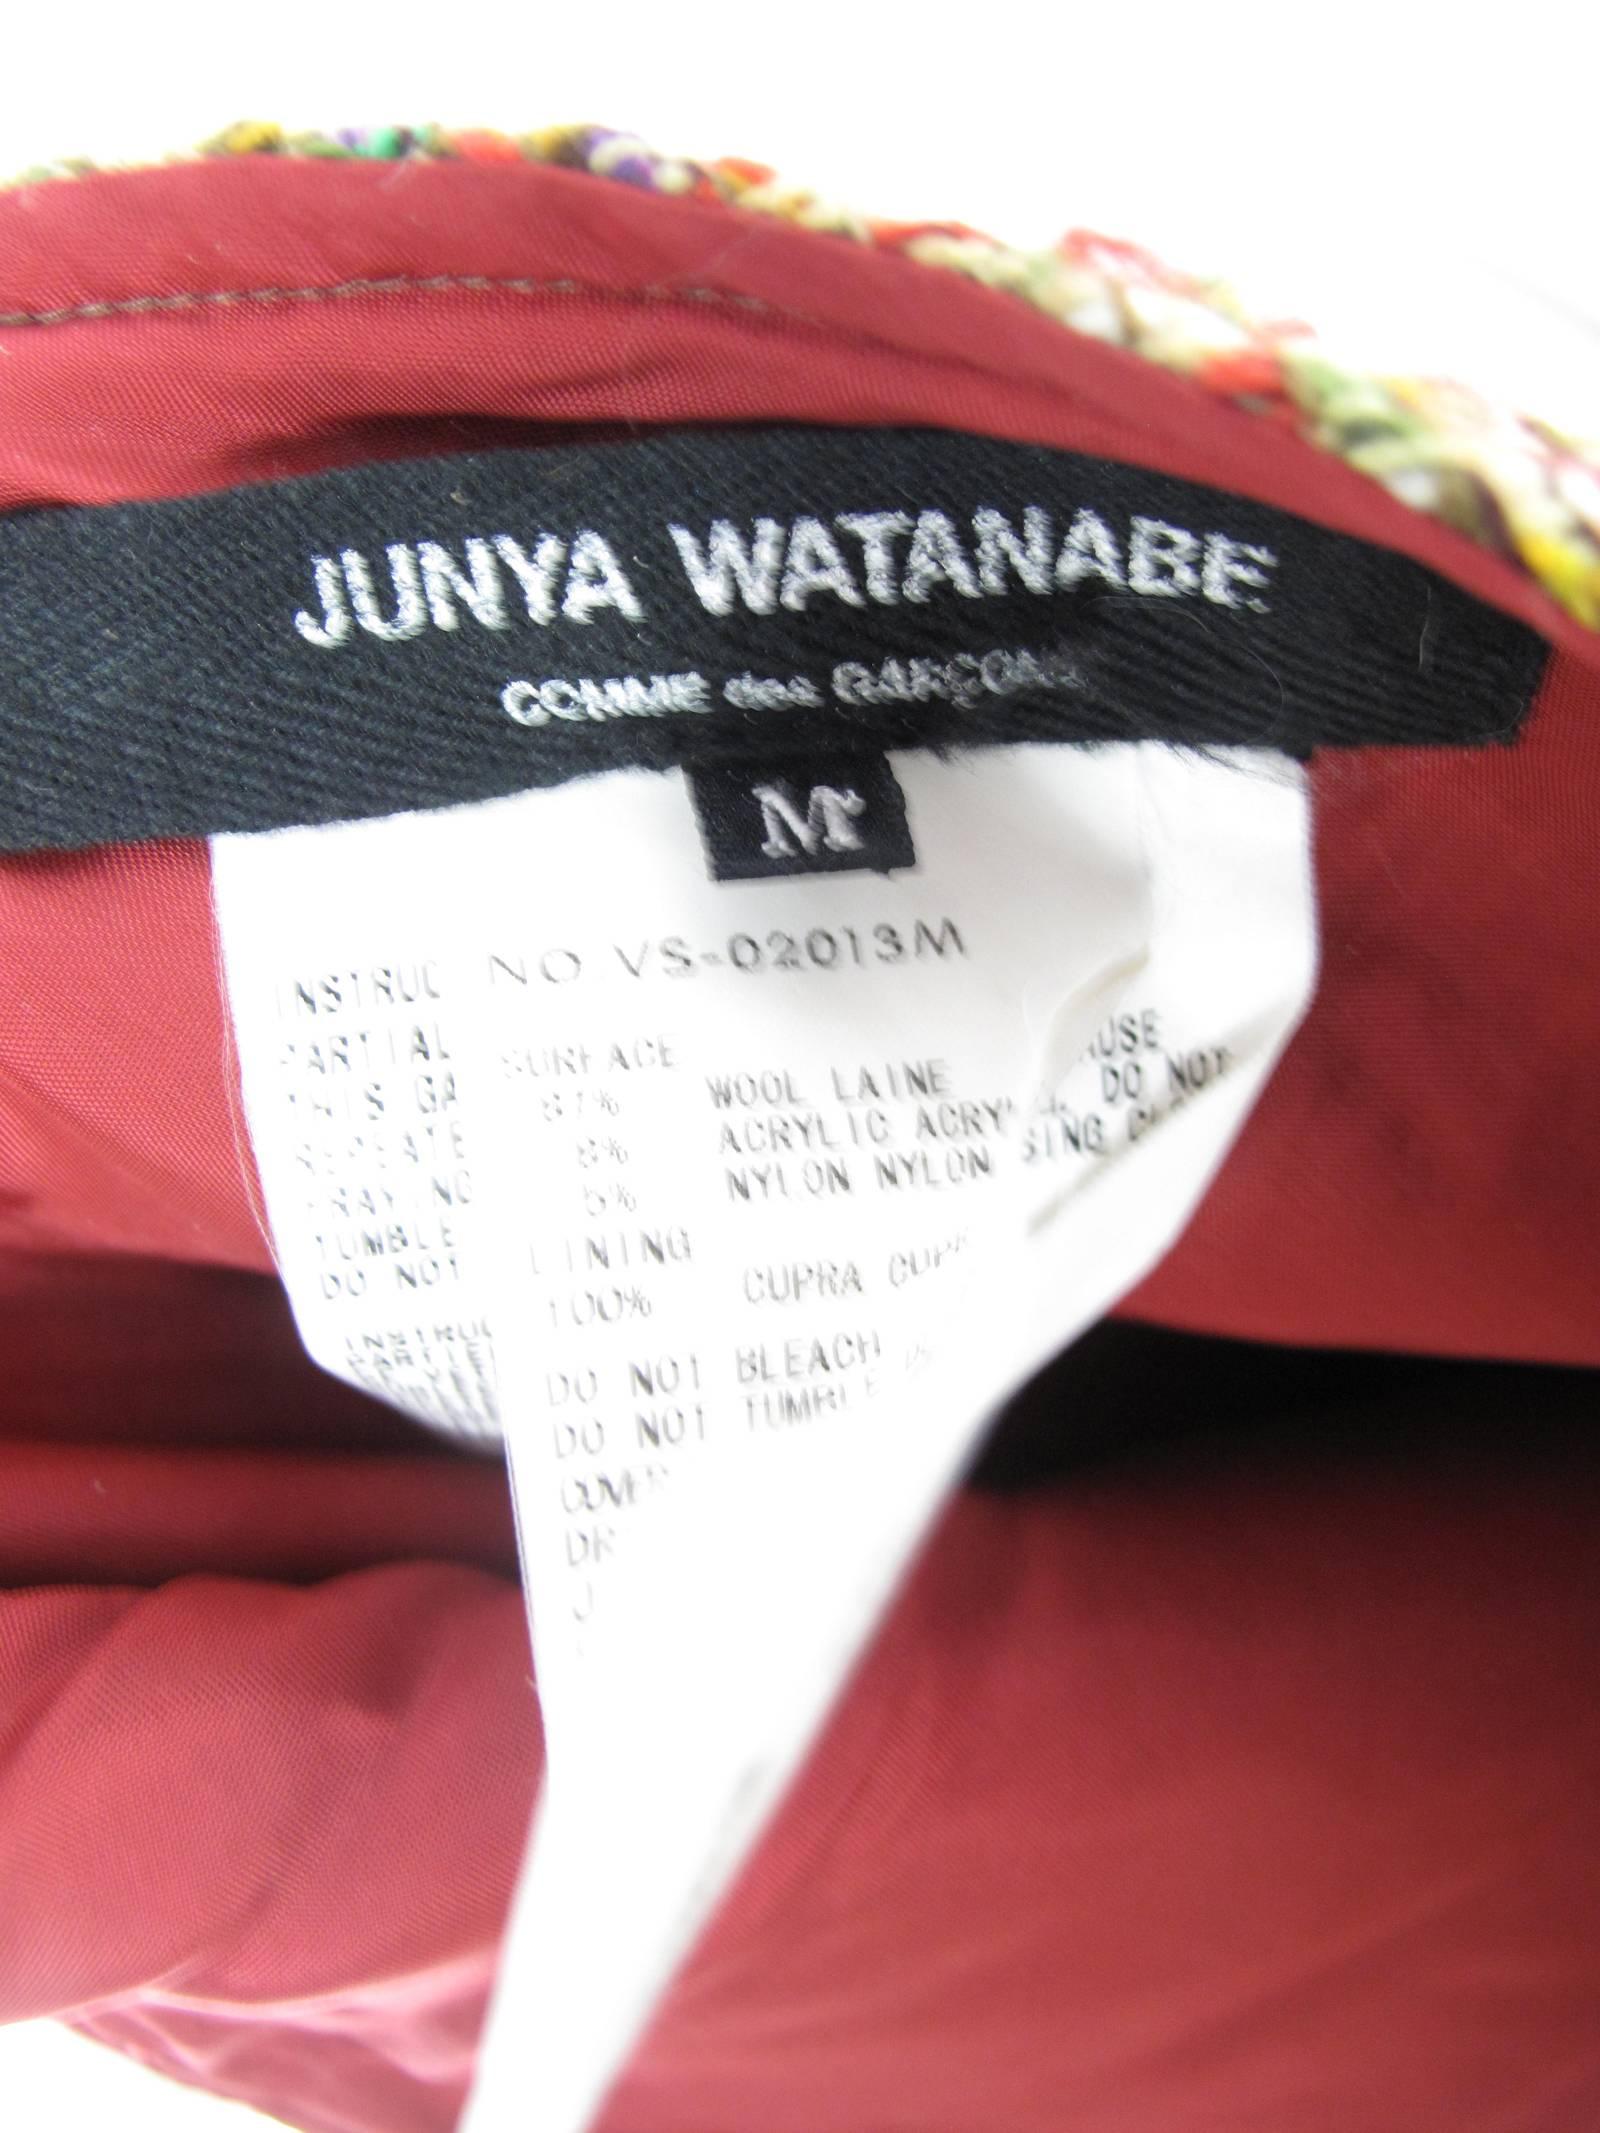 Brown Junya Watanabe for Commes des Garcons Skirt